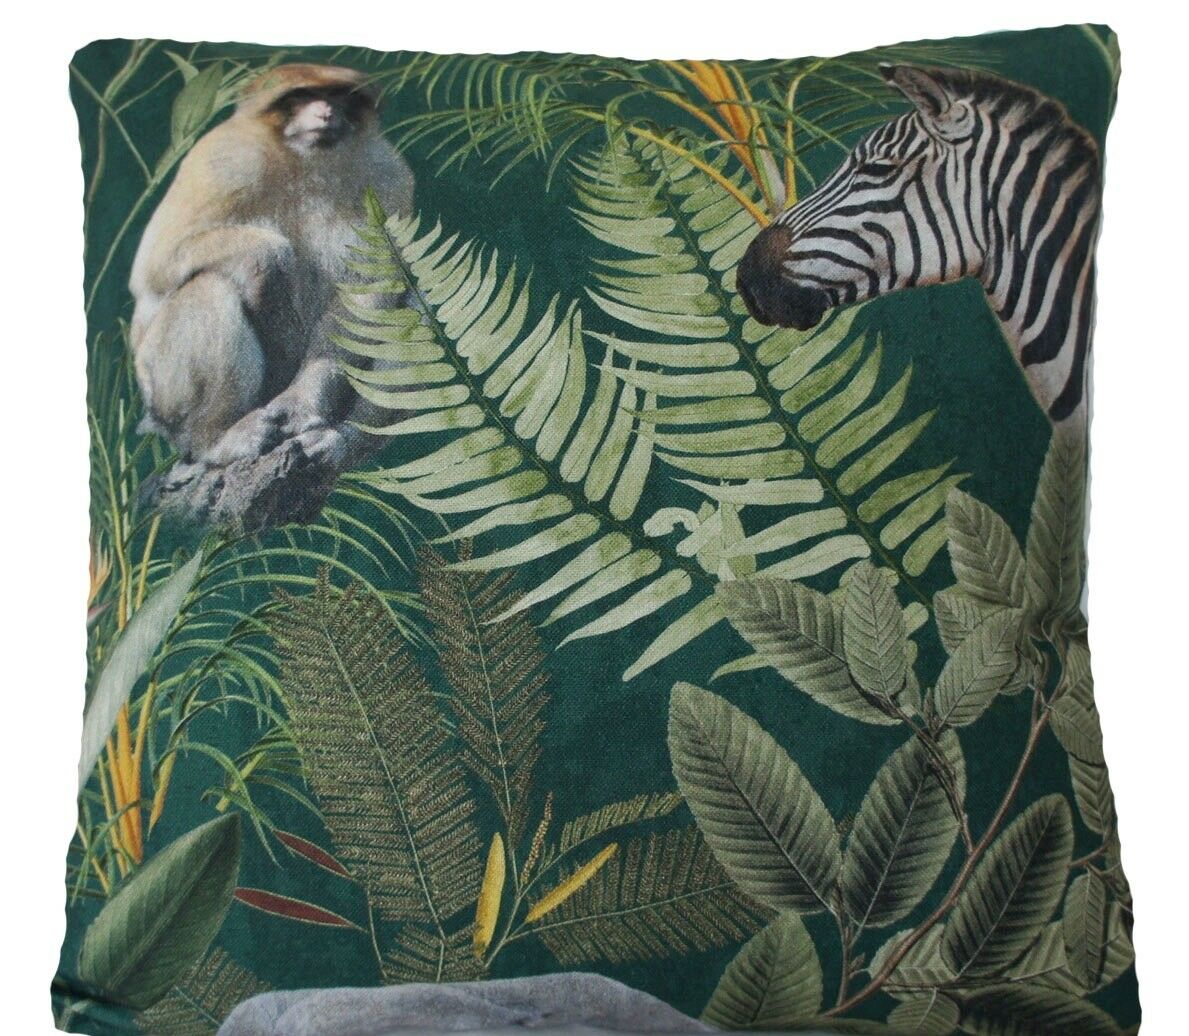 Tiger Cushion Cover Jungle Animals Printed Cotton Throw Pillow Case Green Forest Monkey Giraffe Zebra Print Sofa Decor 16"